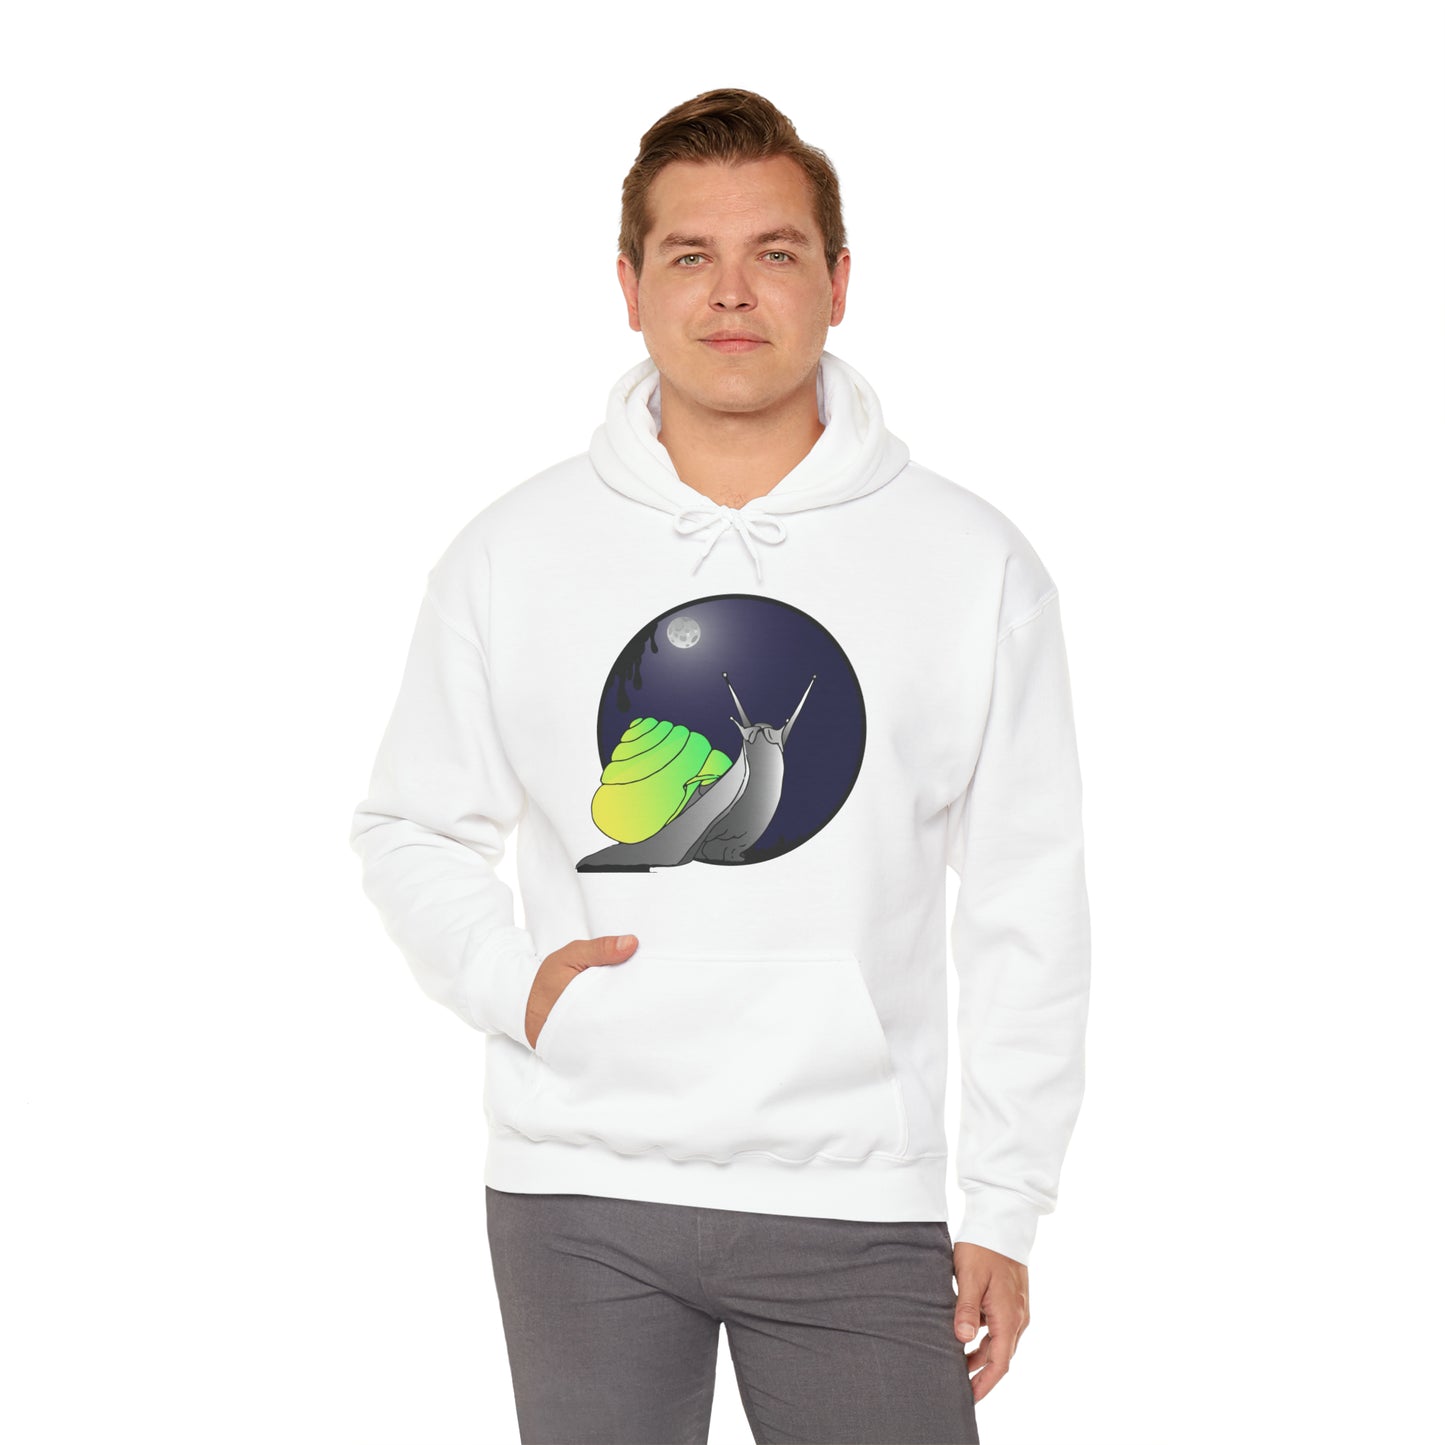 Super Full Moon Snail - Hooded Sweatshirt